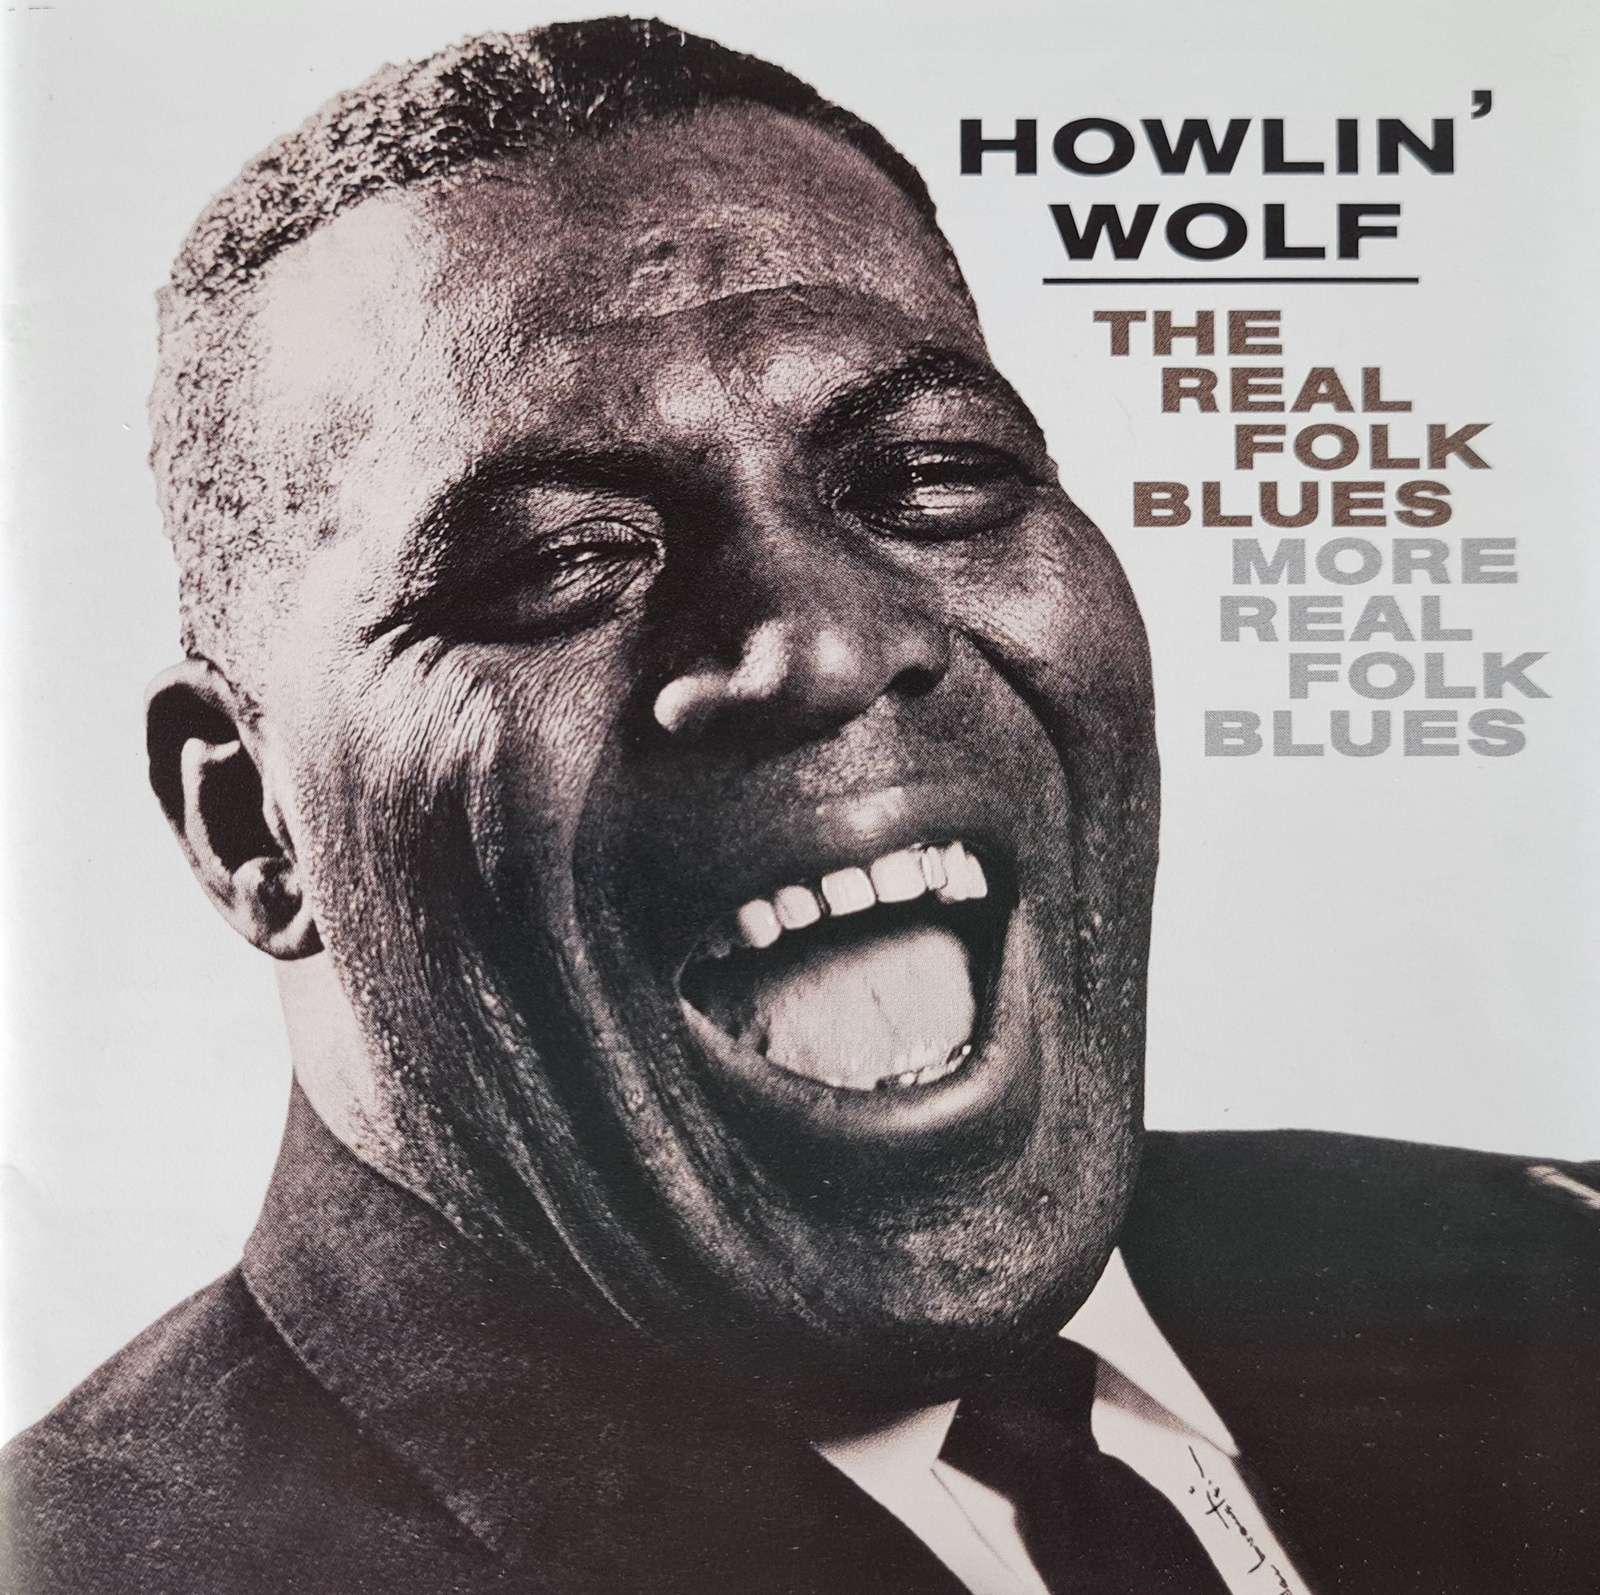 Howlin' Wolf - The Real Folk Blues - More Real Folk Blues (CD)